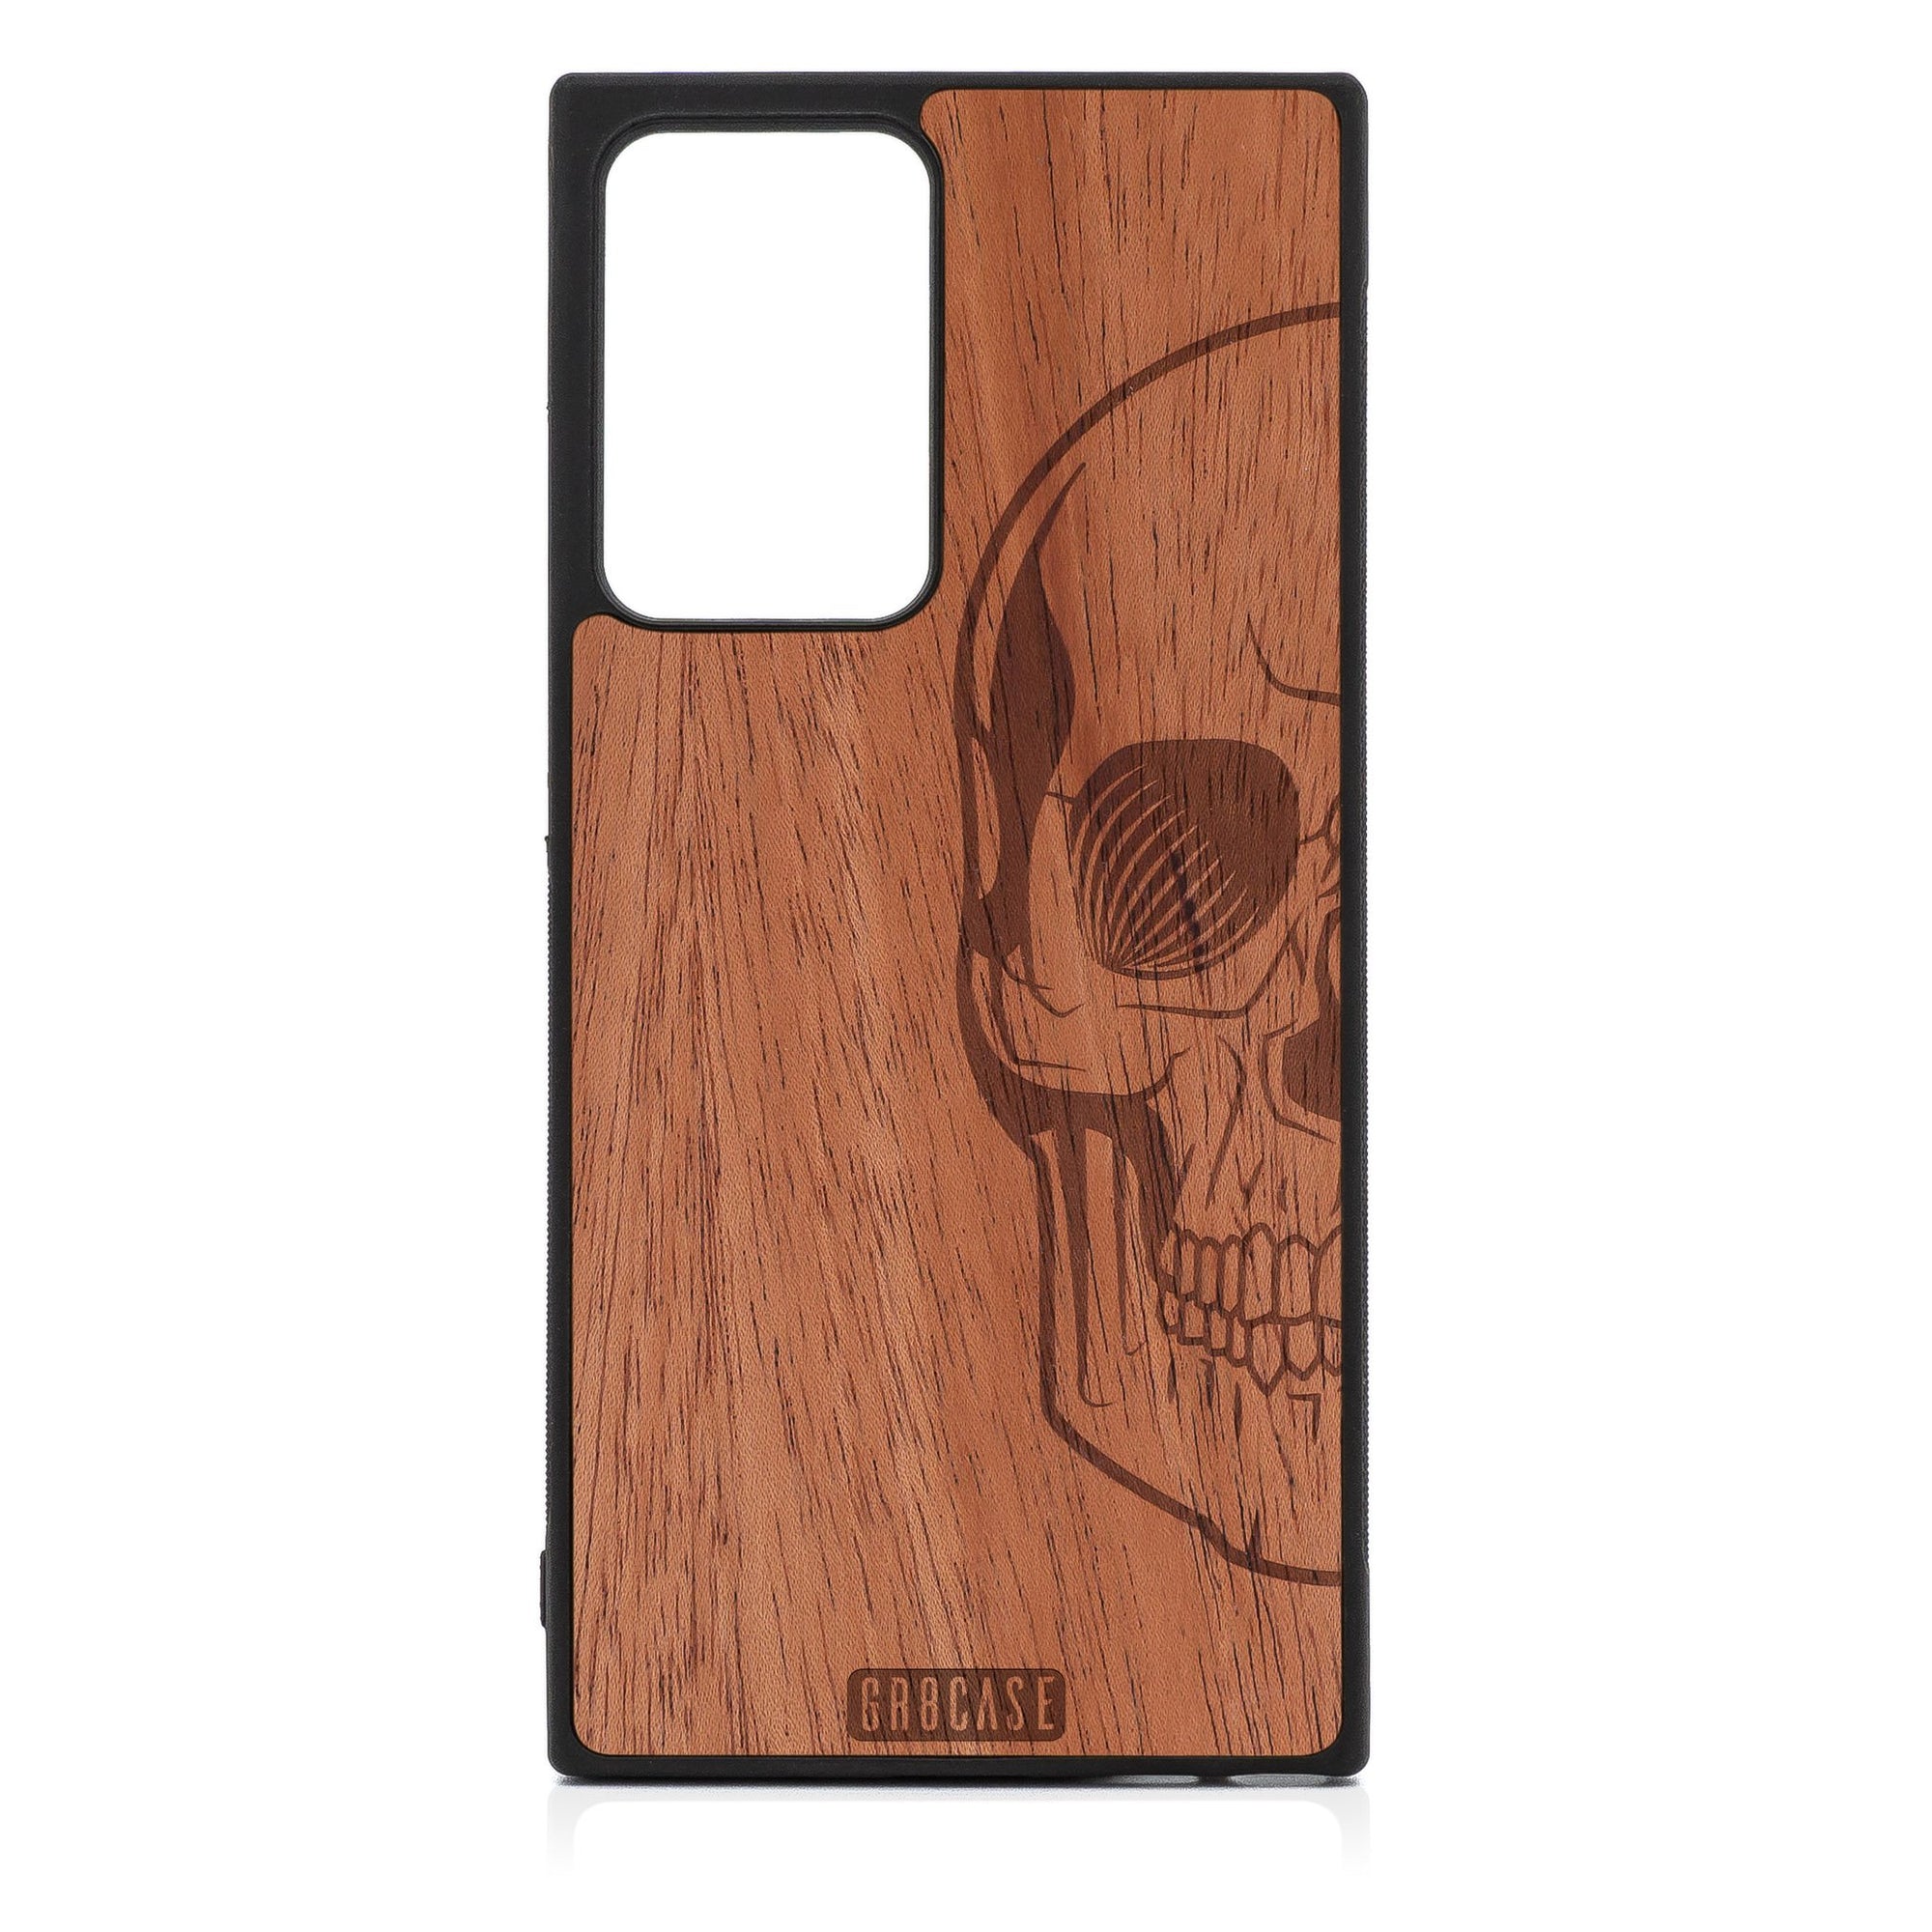 Half Skull Design Wood Case For Samsung Galaxy Note 20 Ultra